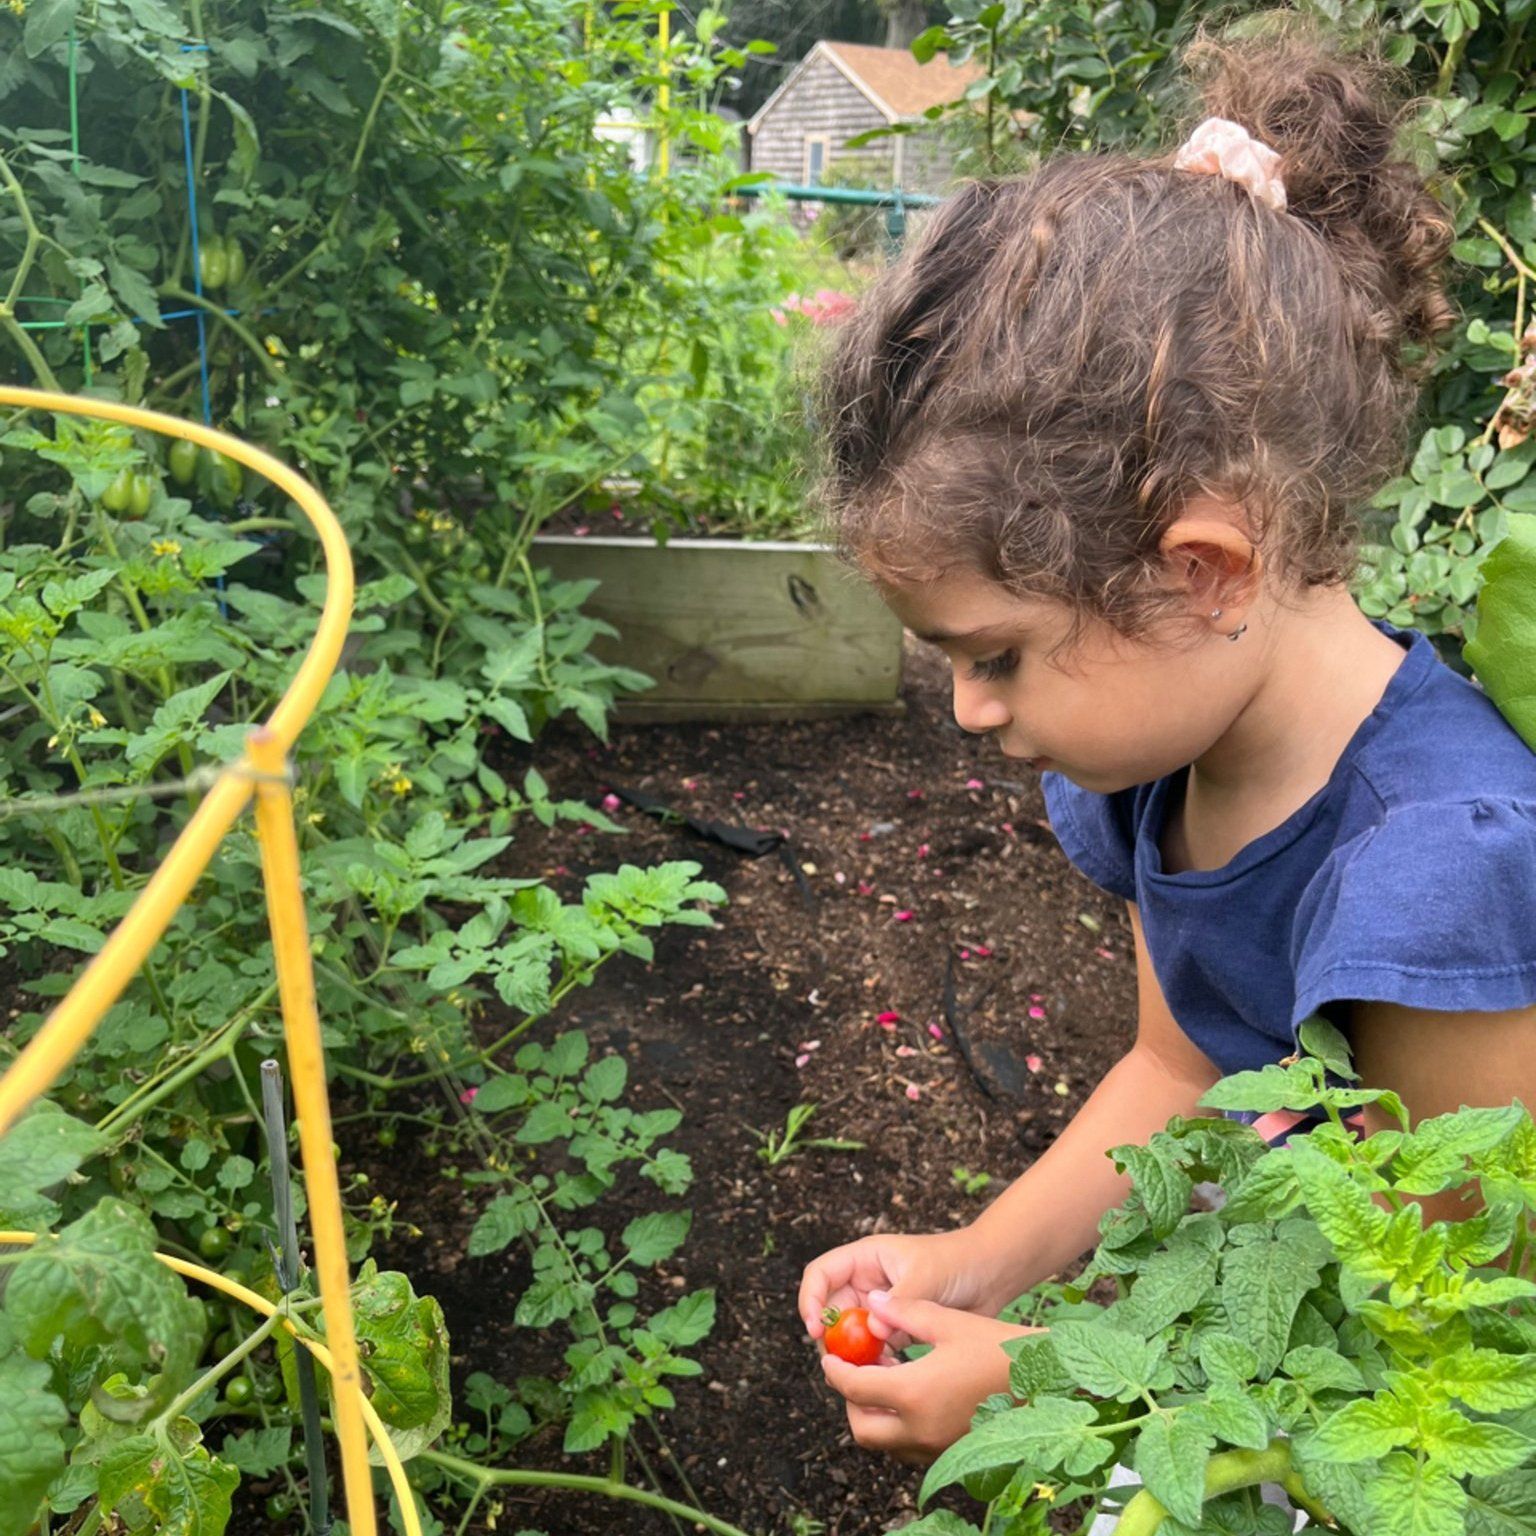 Young child gardening